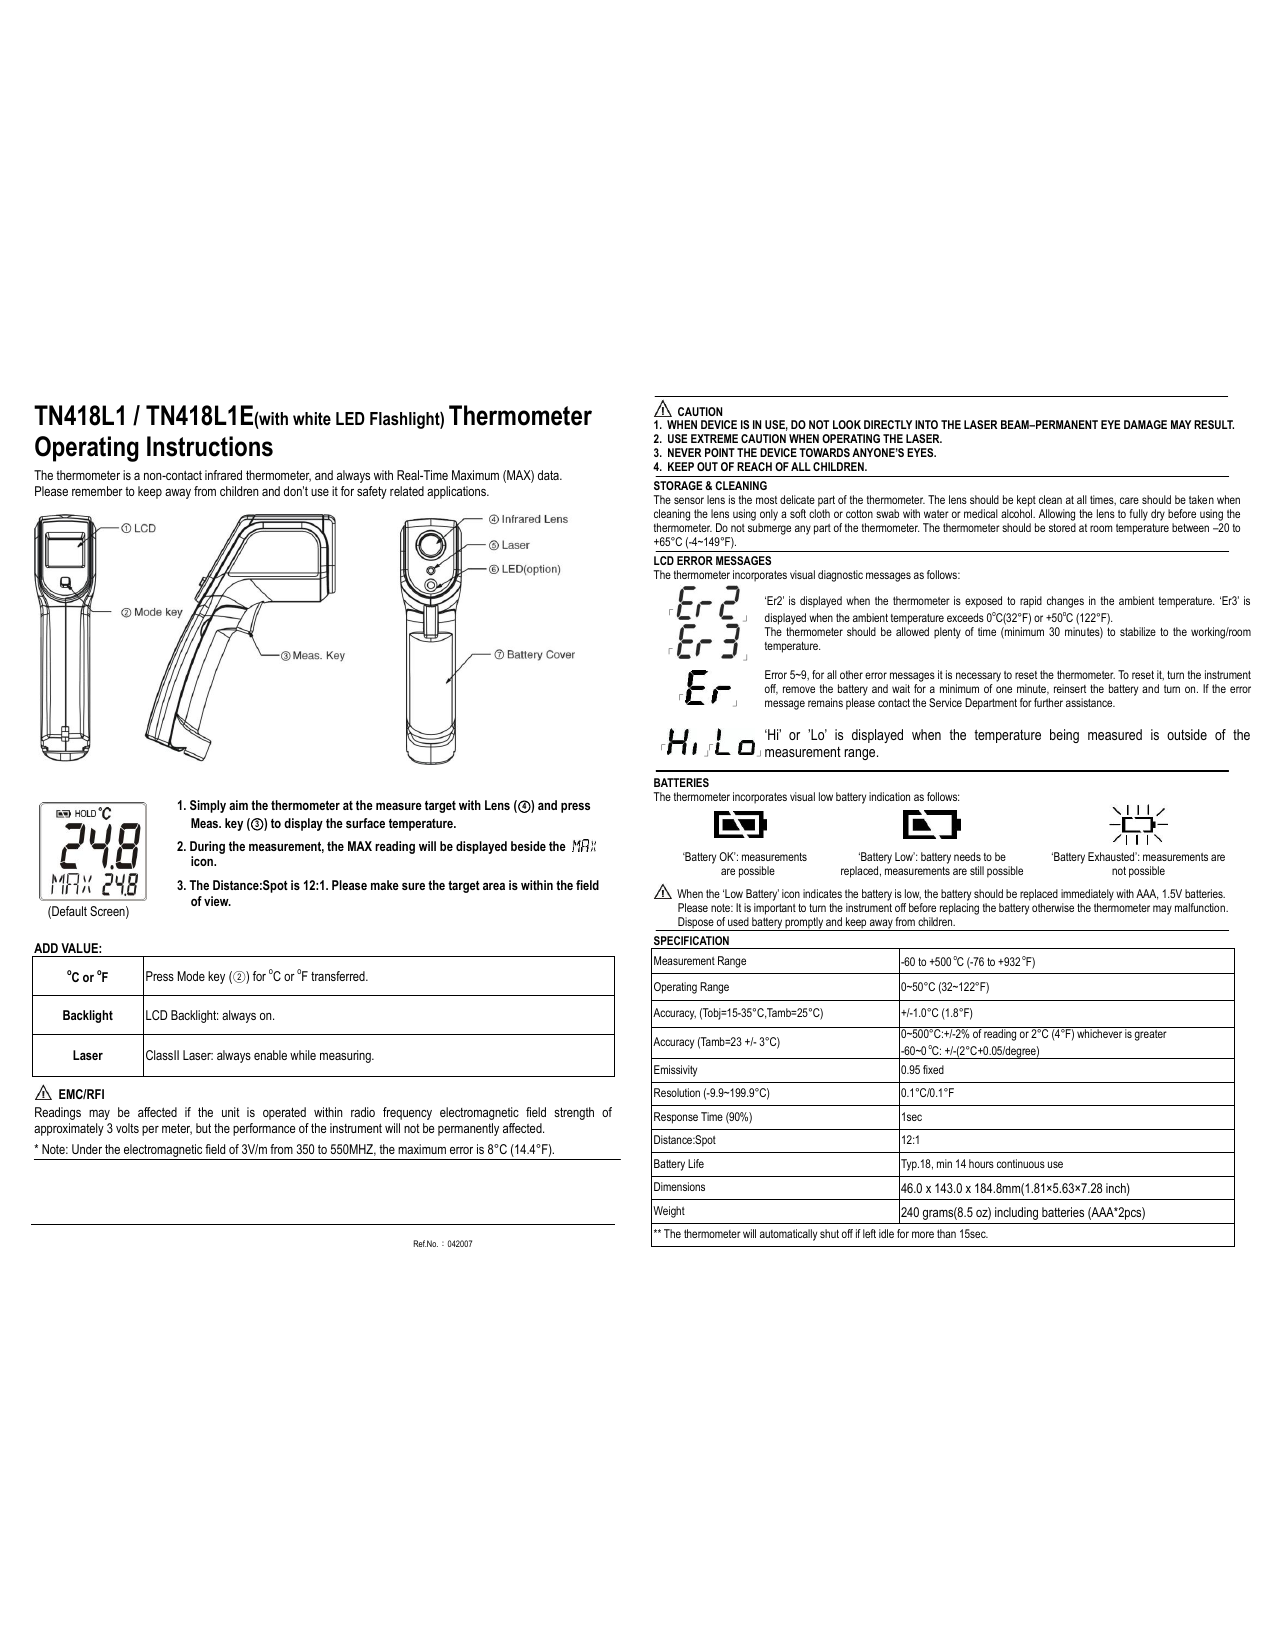 Metris Instruments Model TN418L1 Non-Contact Digital 8-Point Laser